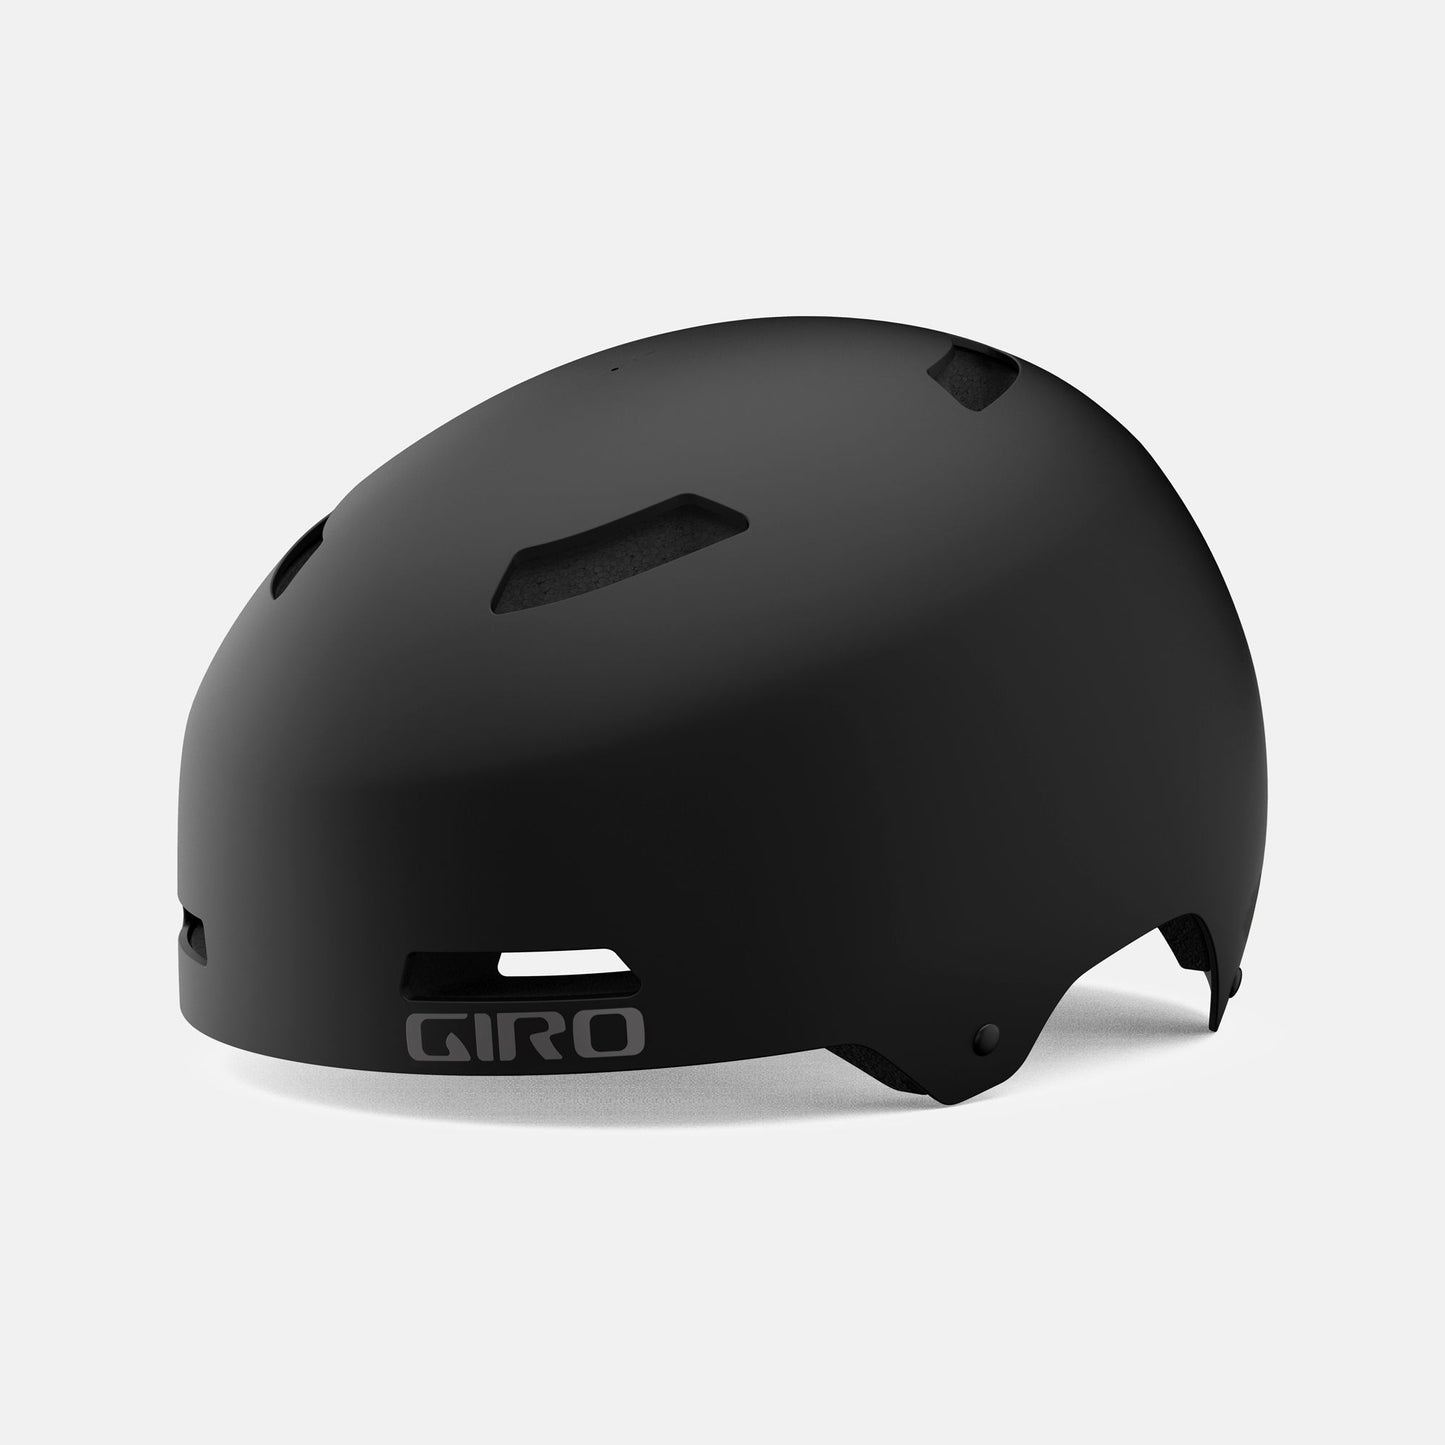 Giro Quarter Adult Dirt Bike Helmet - Matte Black - Size S (51–55 cm) - Open Box  - (Without Original Box)